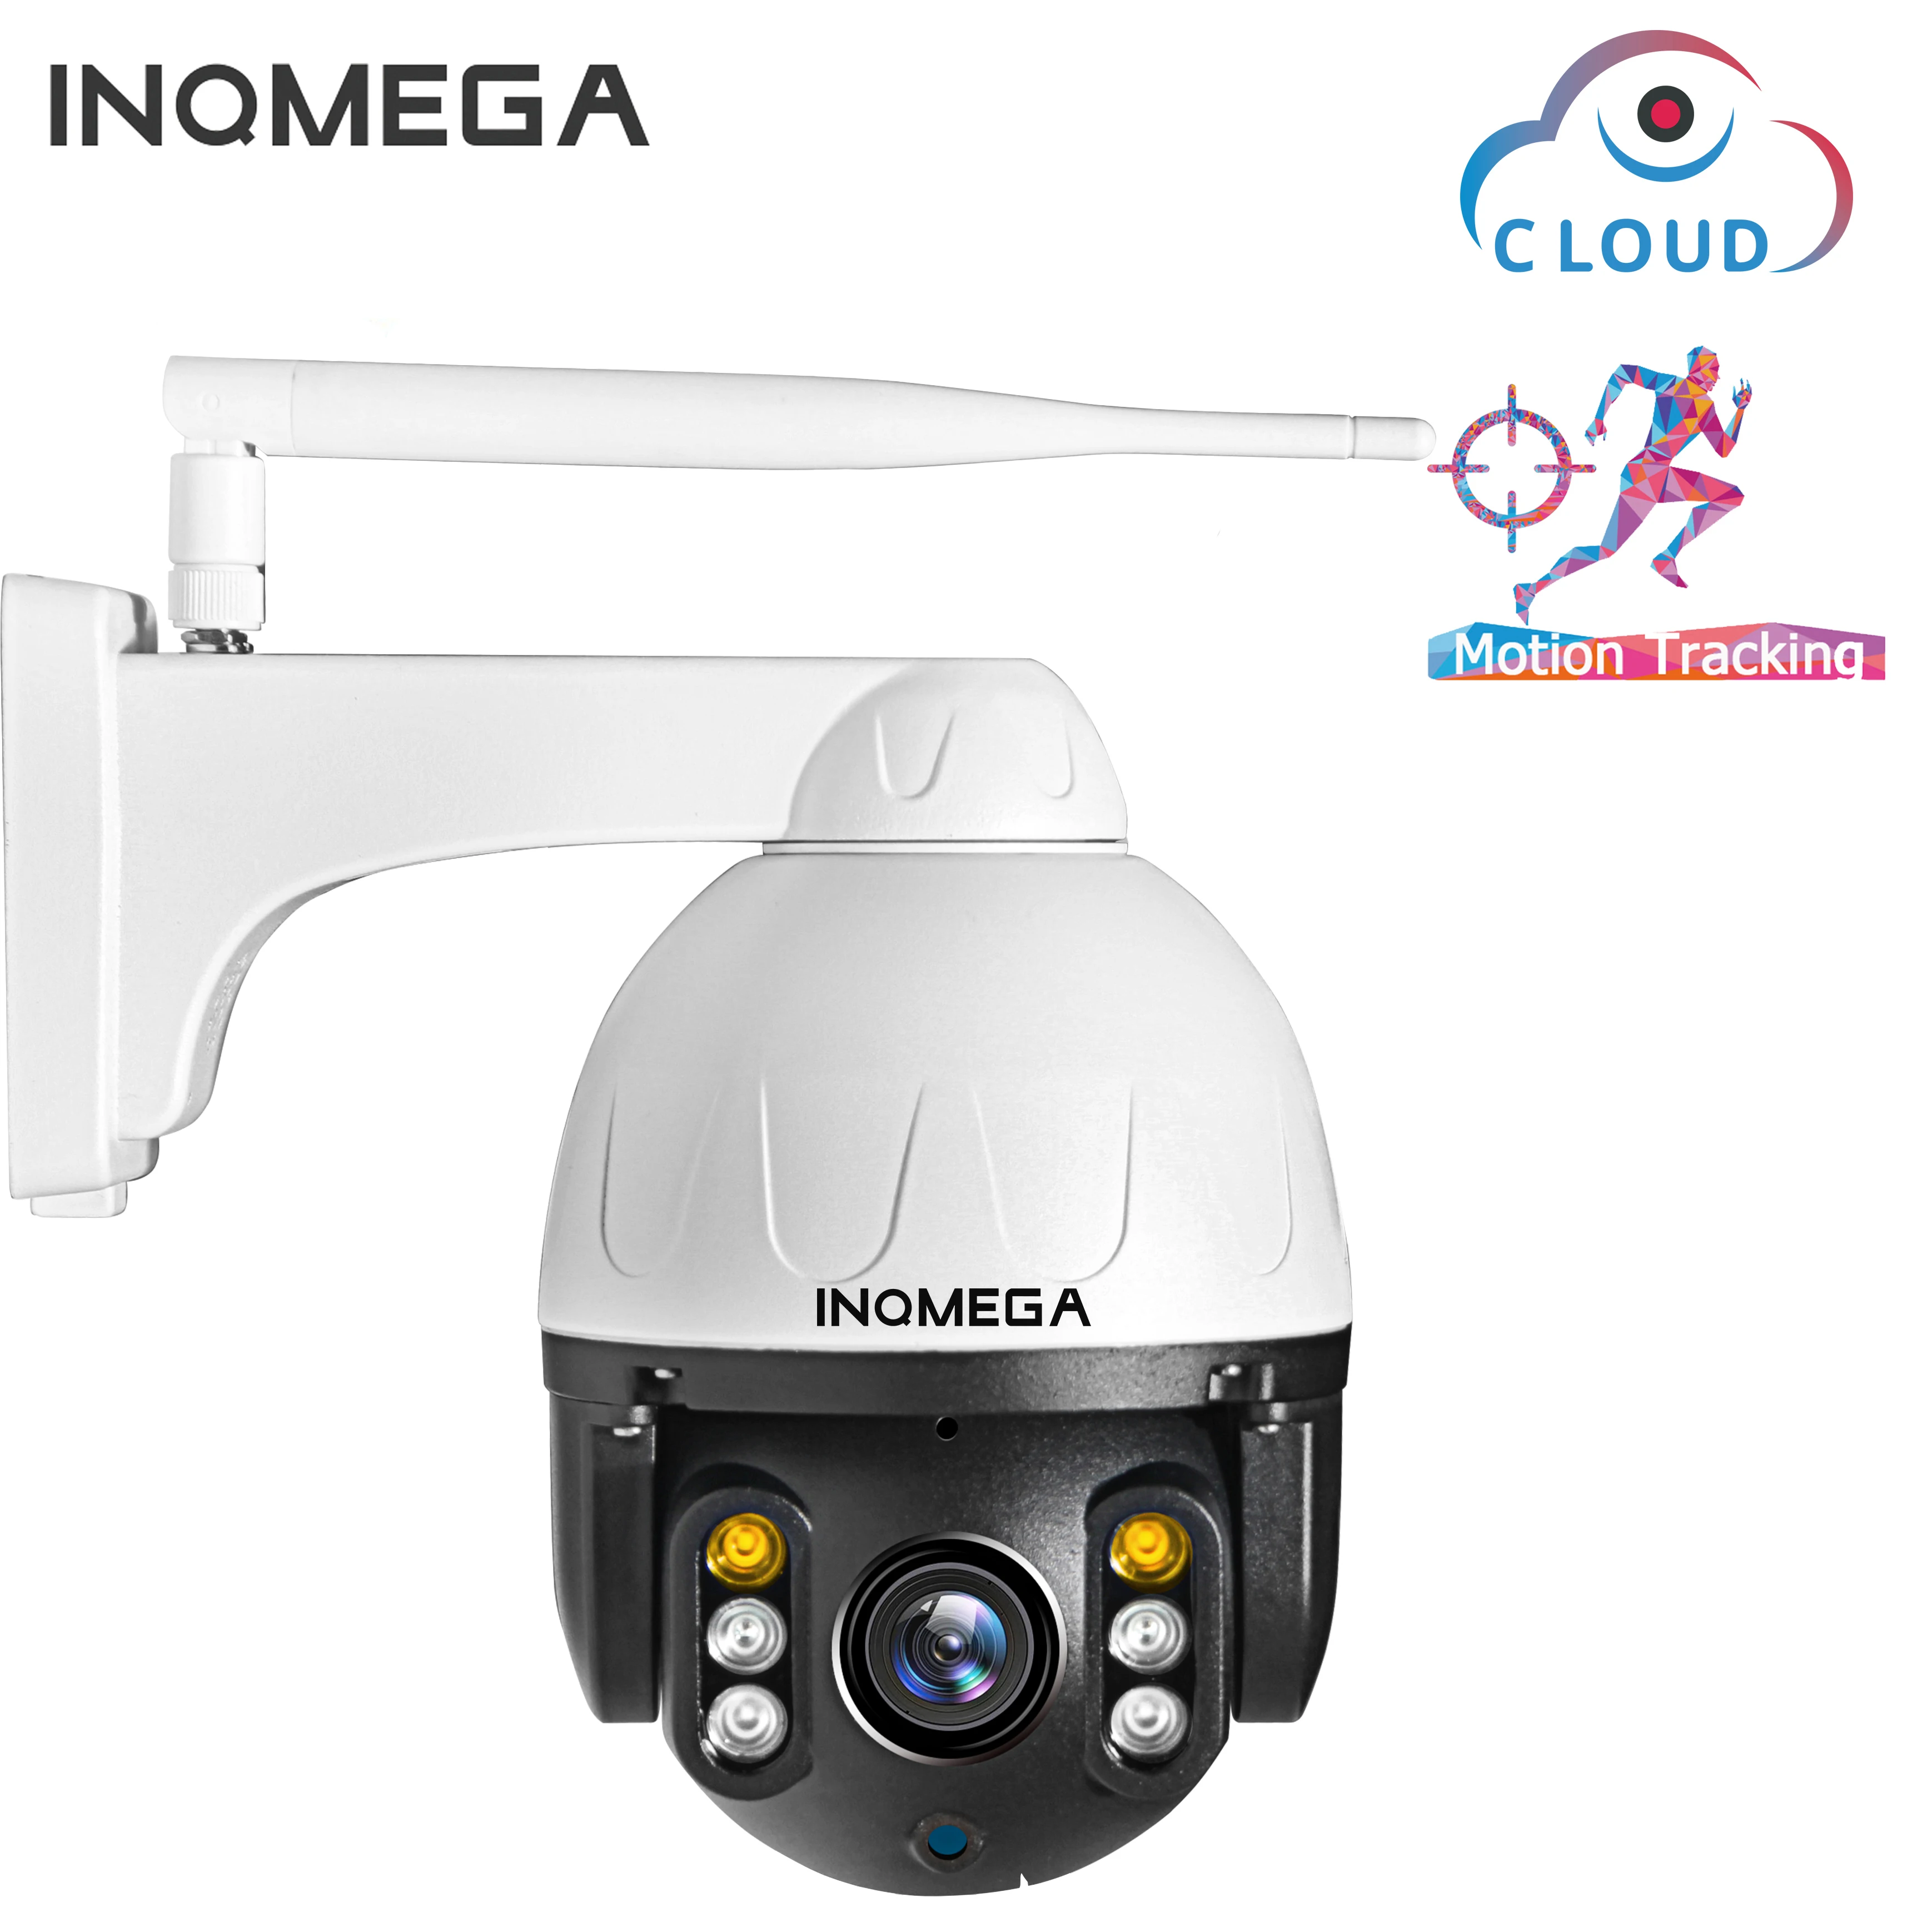 

INQMEGA Cloud 1080P Outdoor PTZ IP Camera WIFI Speed Dome Auto Tracking Camera 4X Digital Zoom 2MP Onvif IR CCTV Security Camera